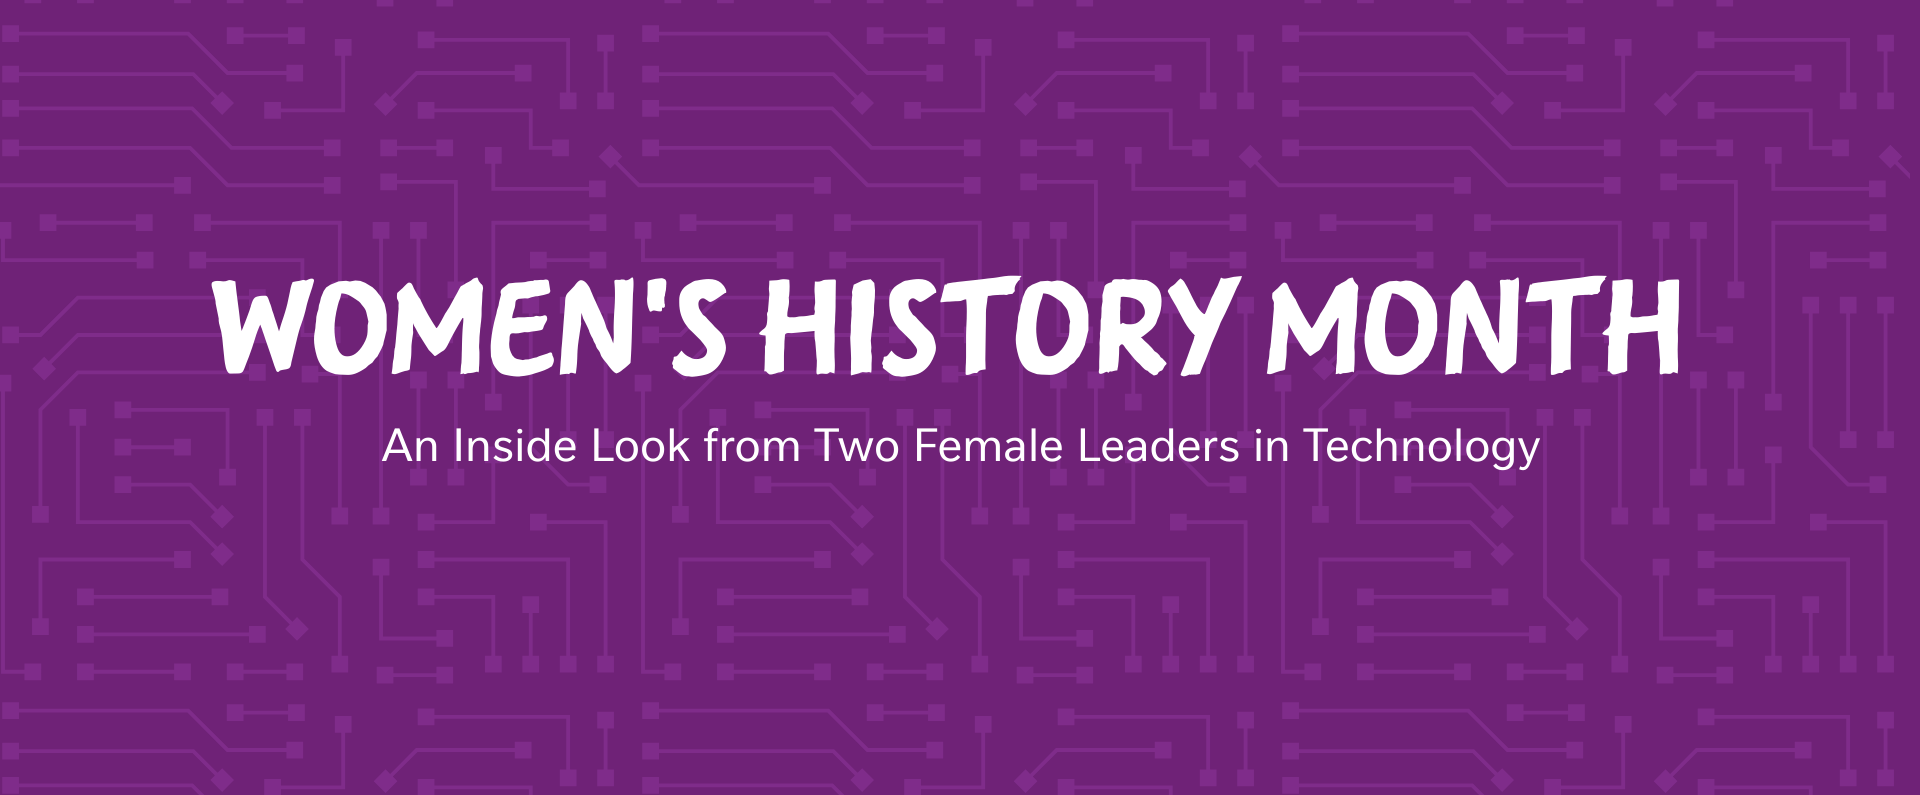 Female Leaders in Technology